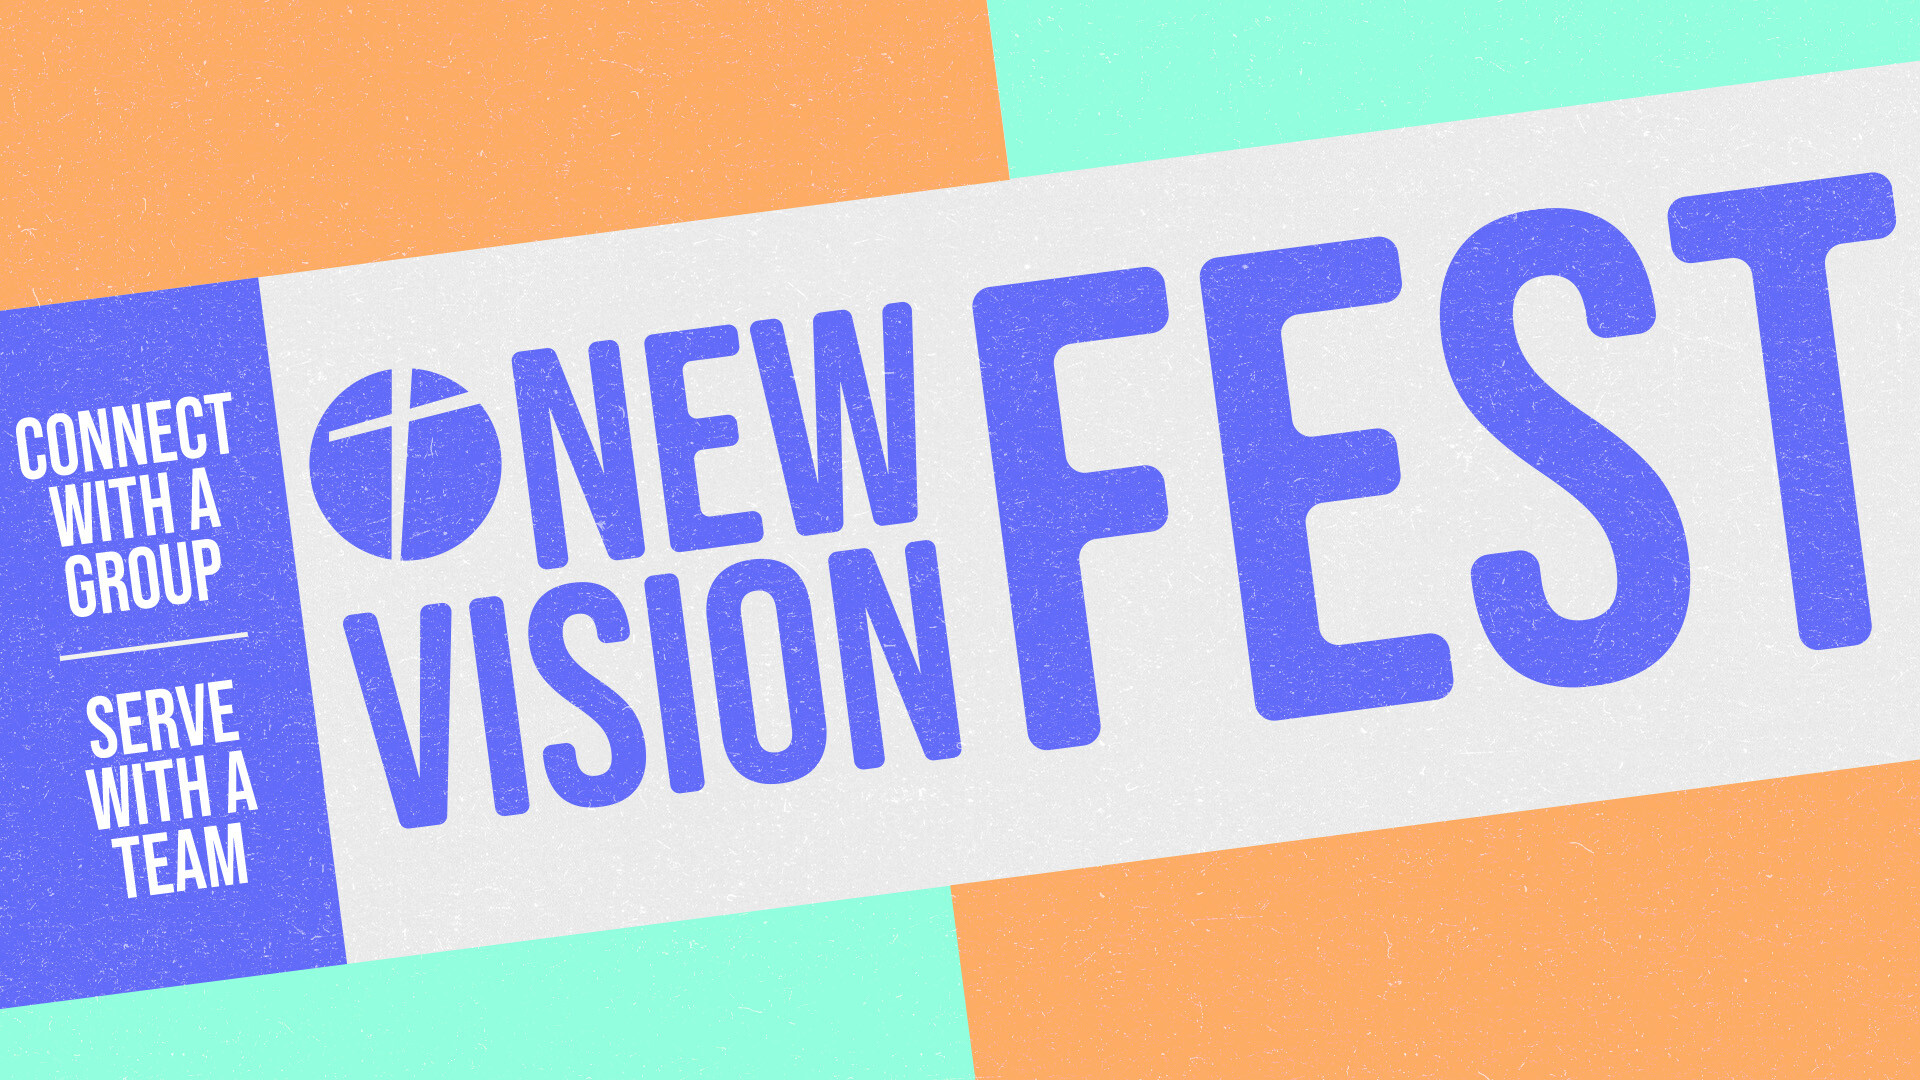 Battlefield New Vision Fest